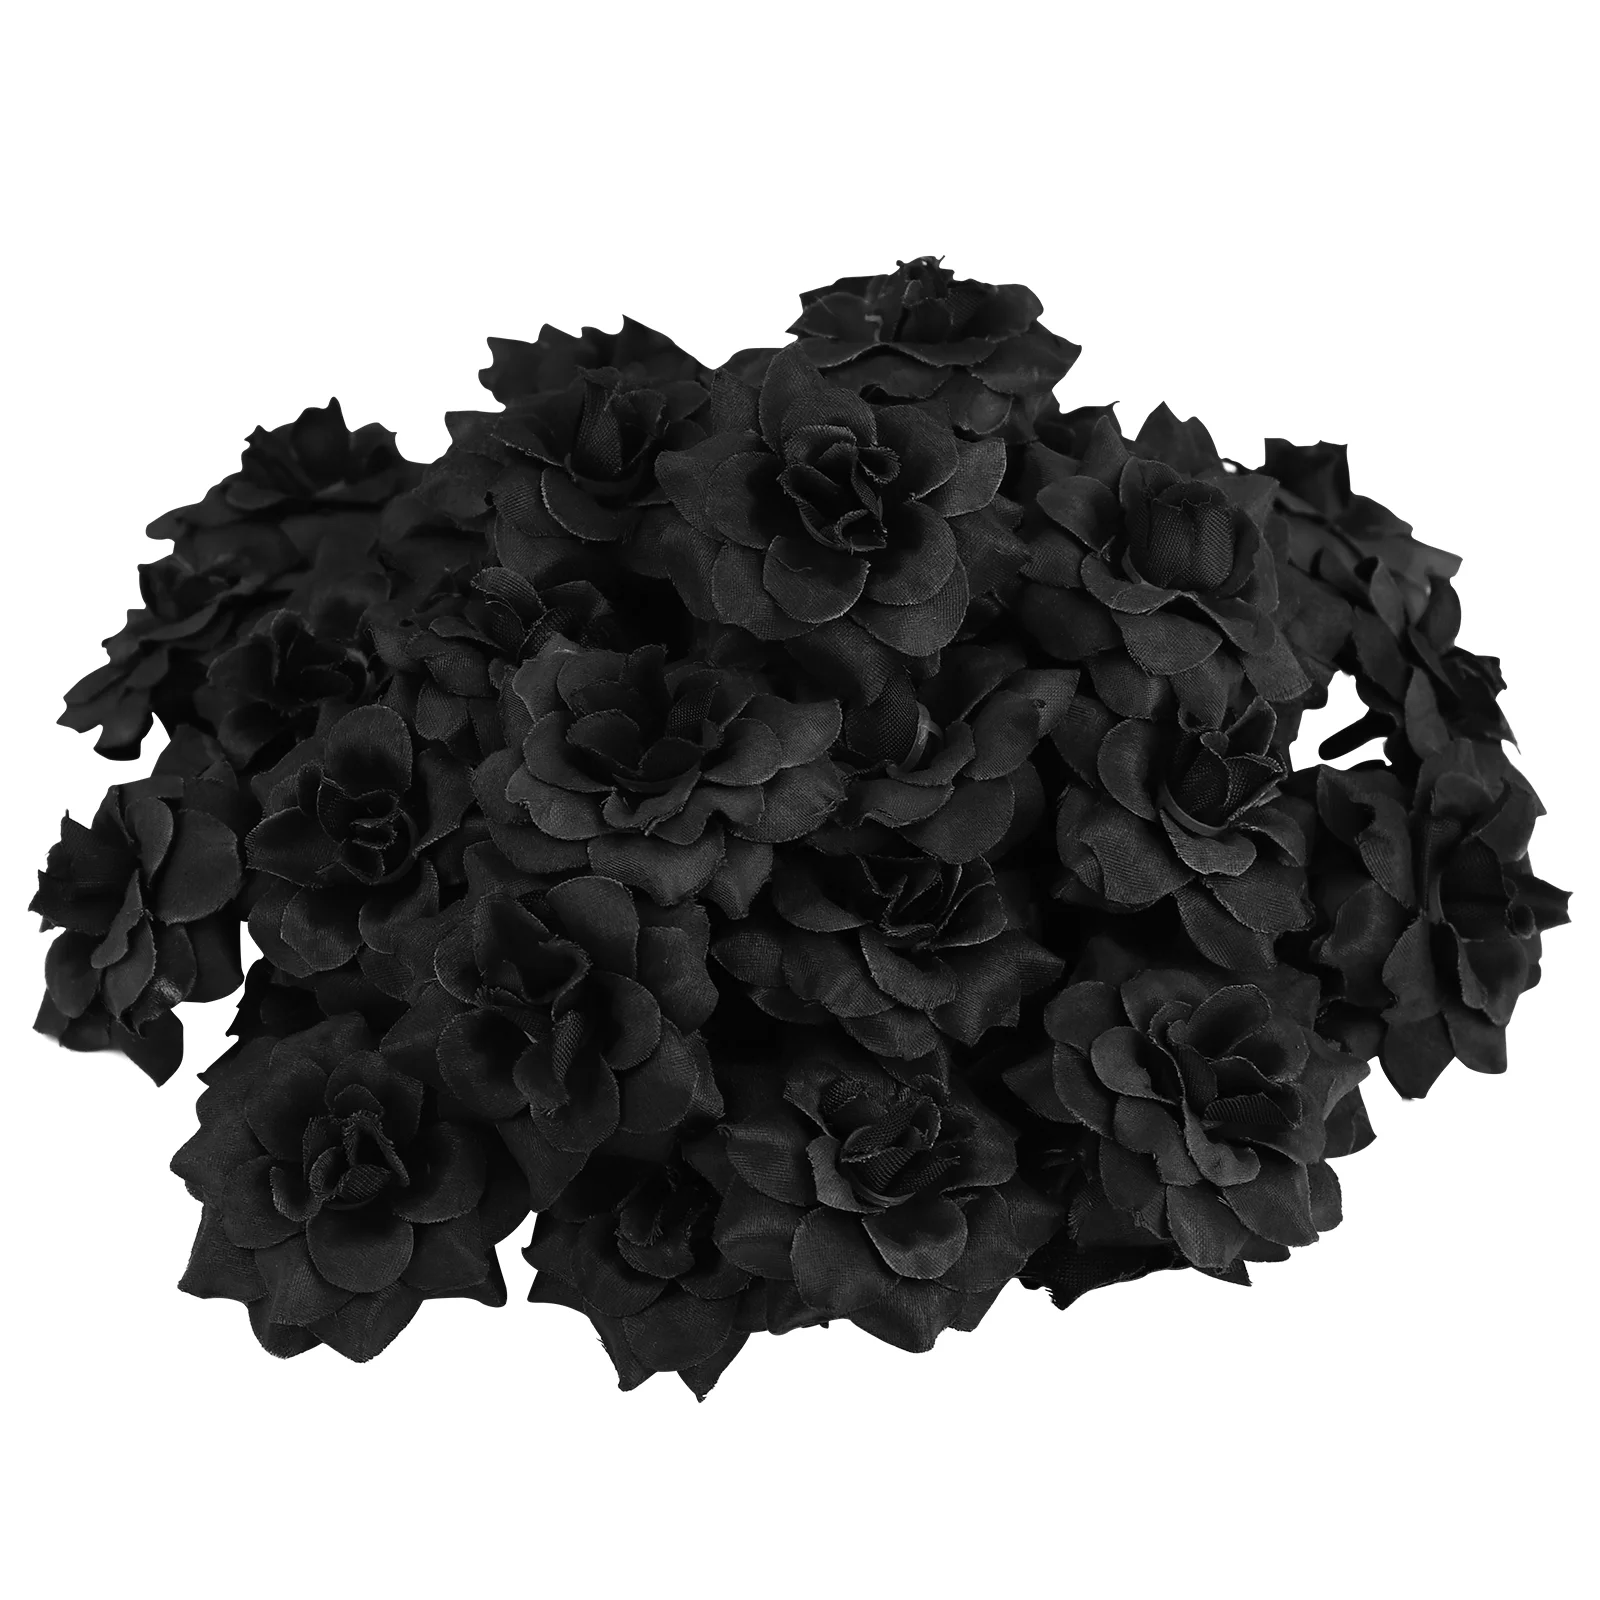 VORCOOL 50pcs Simulation Rose Flower Heads Artificial Roses Blossom Rose Heads for Hat Clothes Album Embellishment (Black)